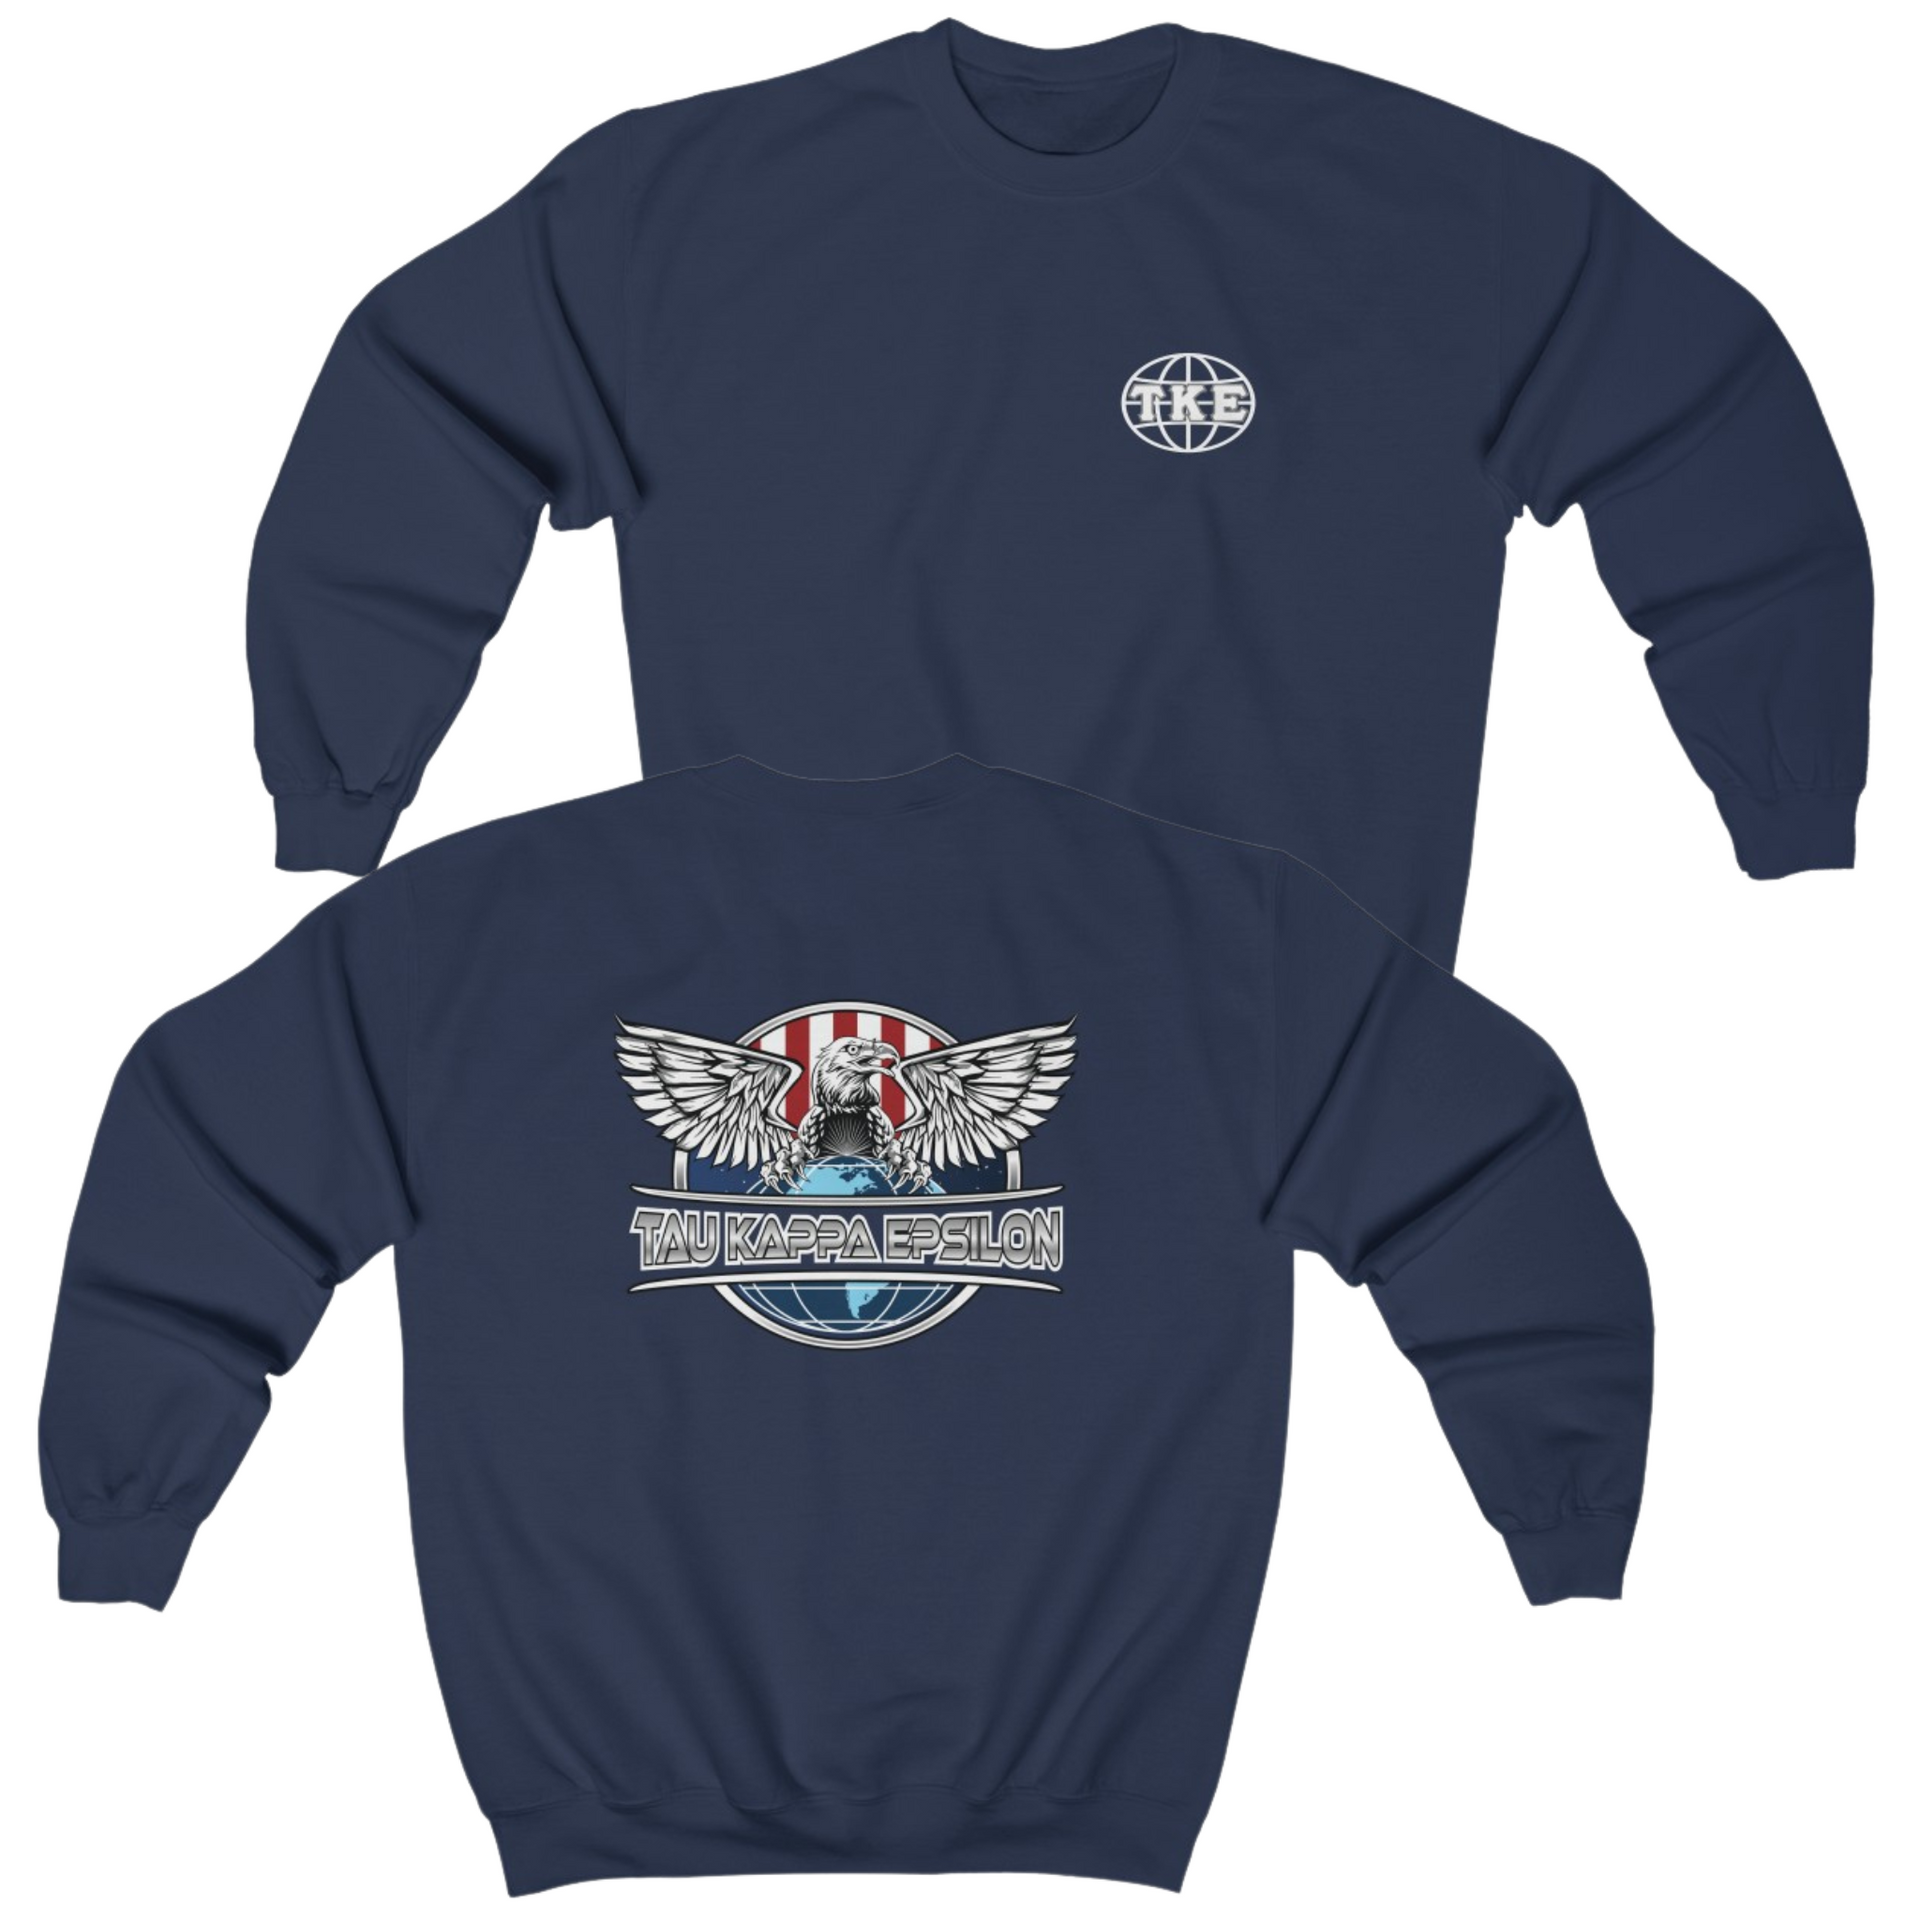 Navy Tau Kappa Epsilon Graphic Crewneck Sweatshirt | The Fraternal Order | Tau Kappa Epsilon Fraternity